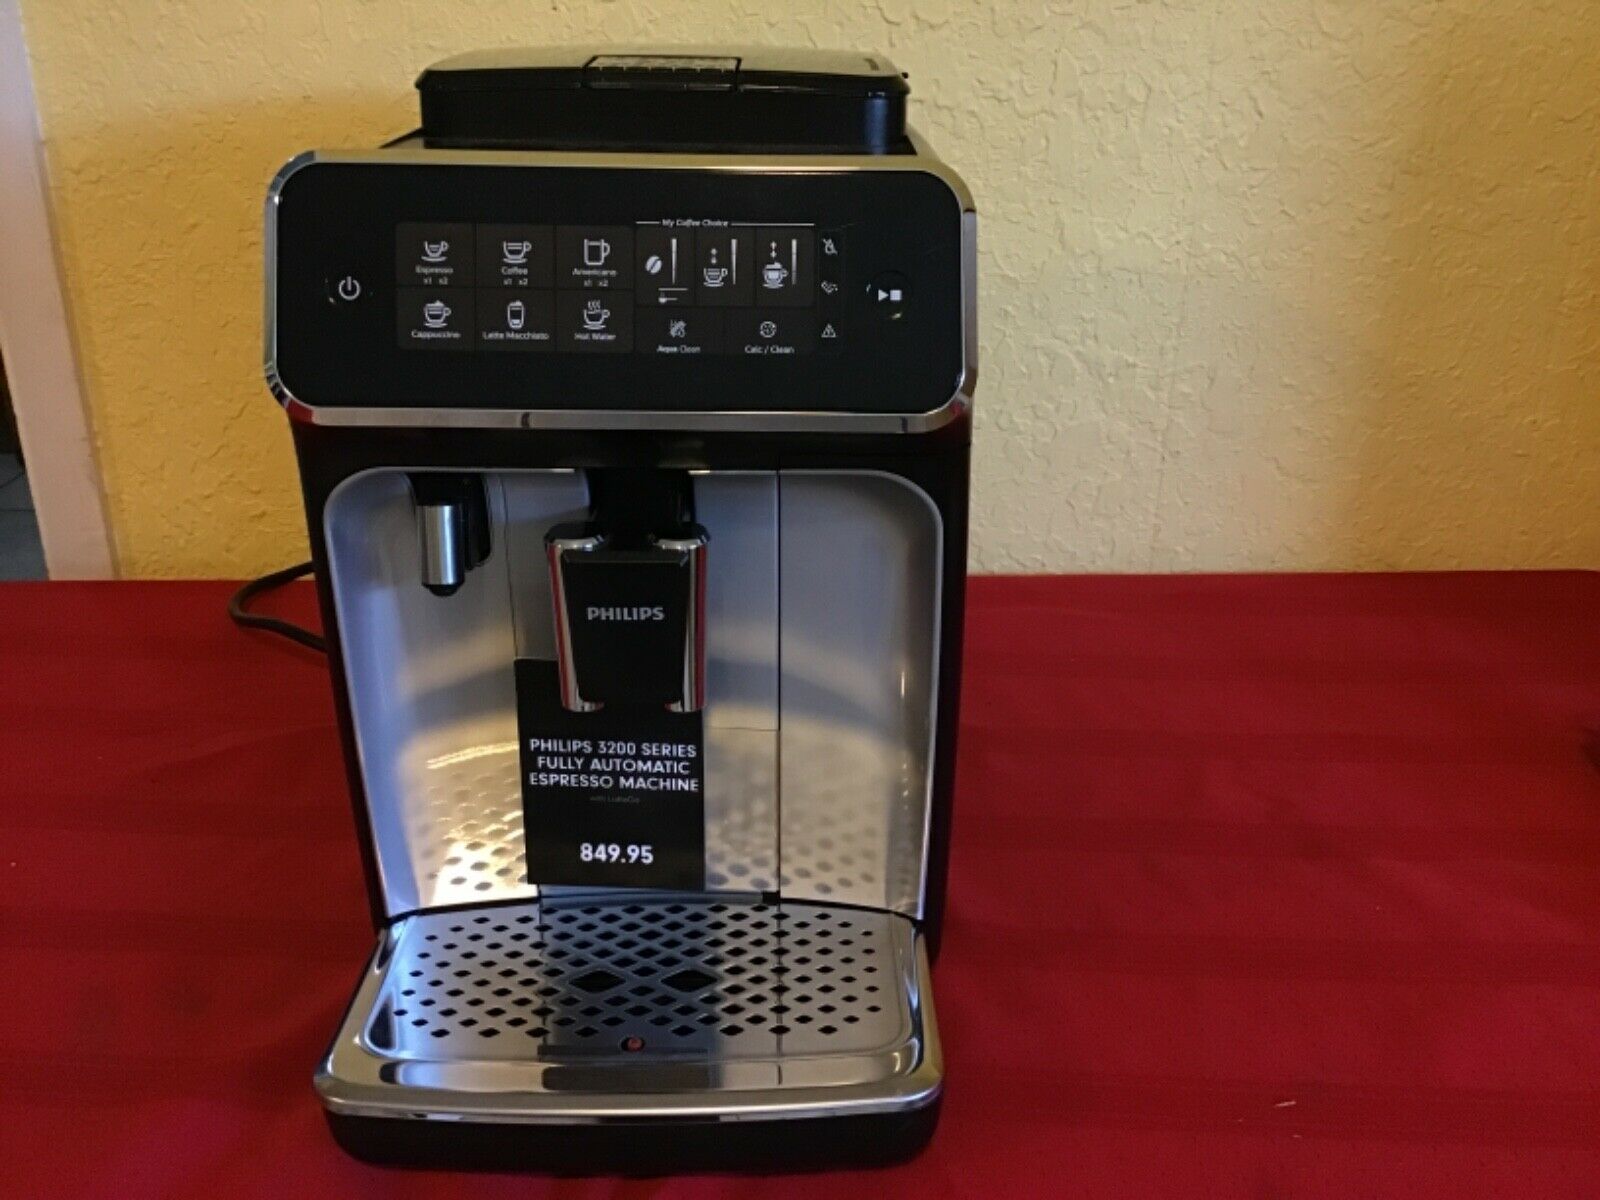 New Philips 3200 Series Fully Automatic Espresso Machine-black